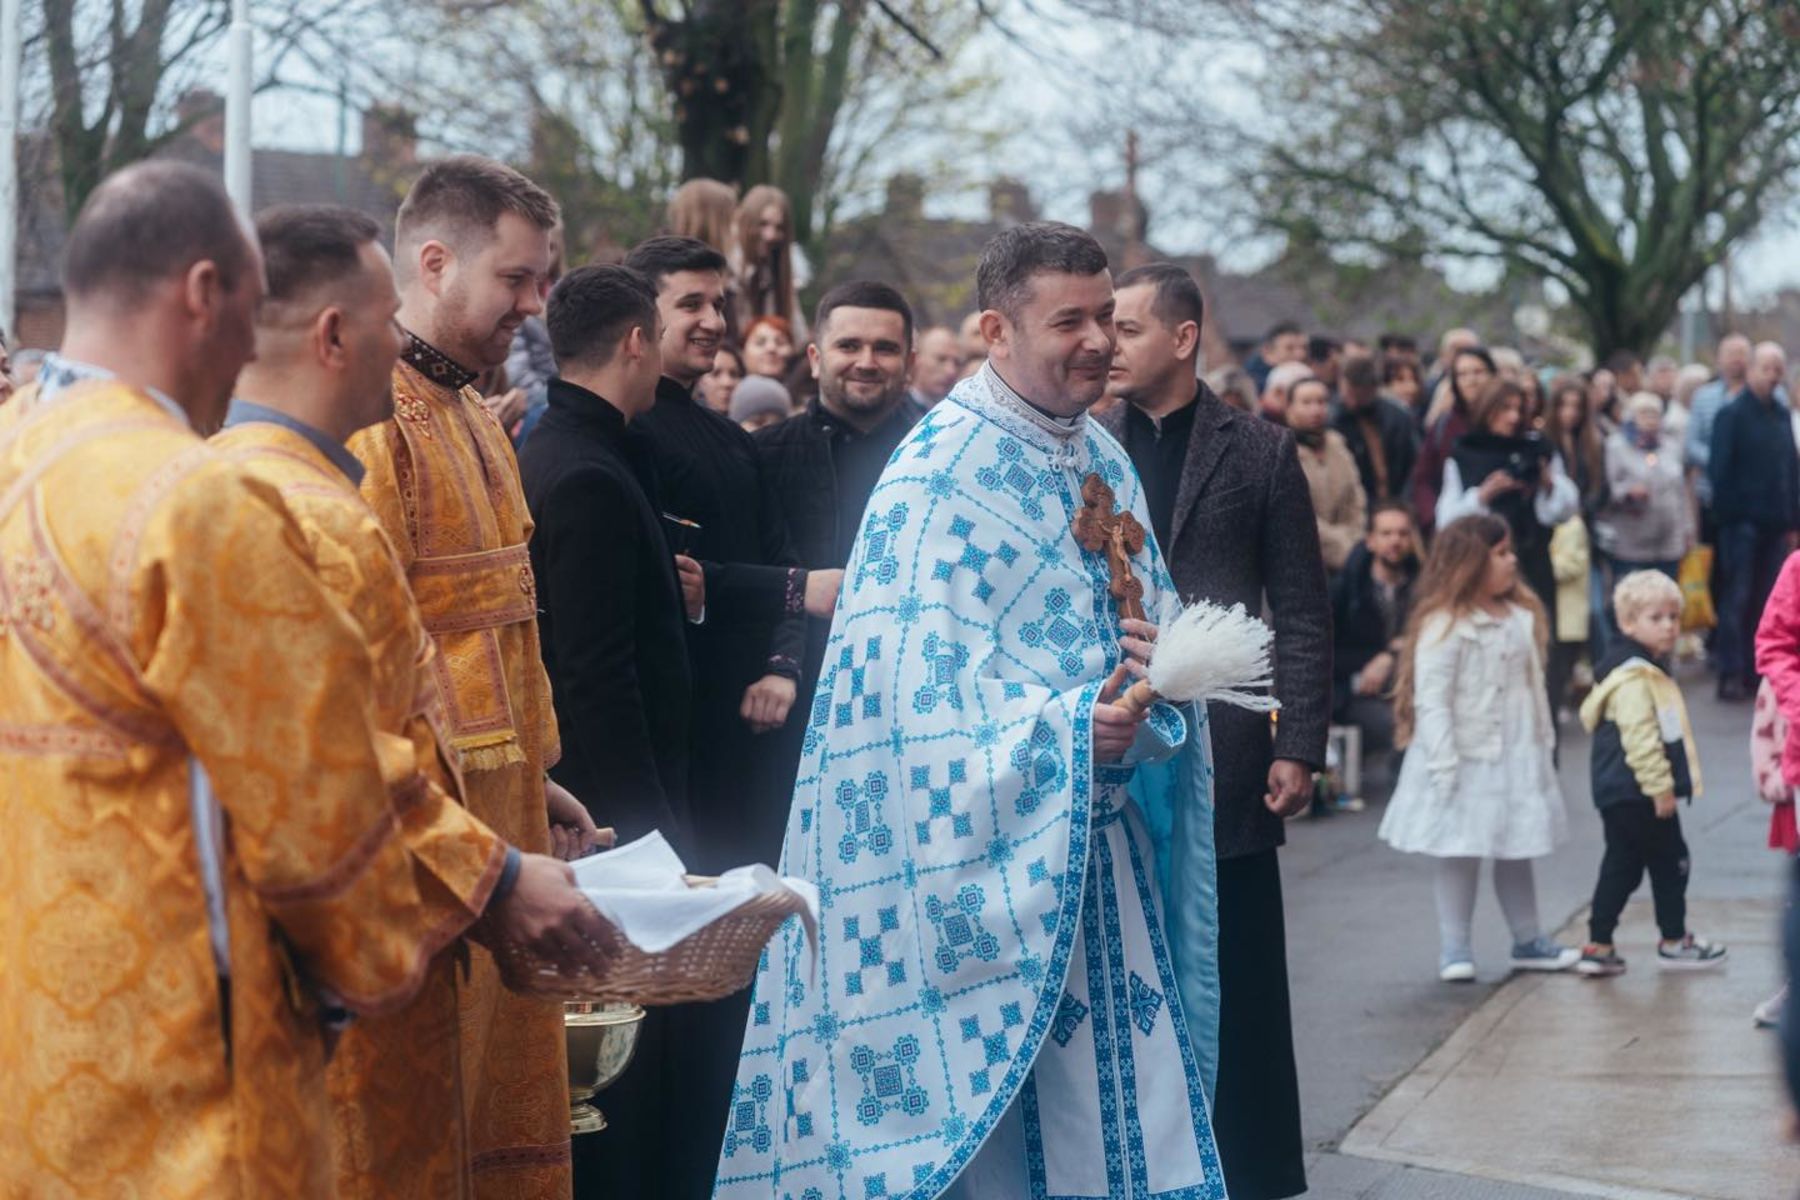 “Christ is risen” from peaceful Irish land to suffering Ukraine: Ukrainians in Ireland celebrate Easter